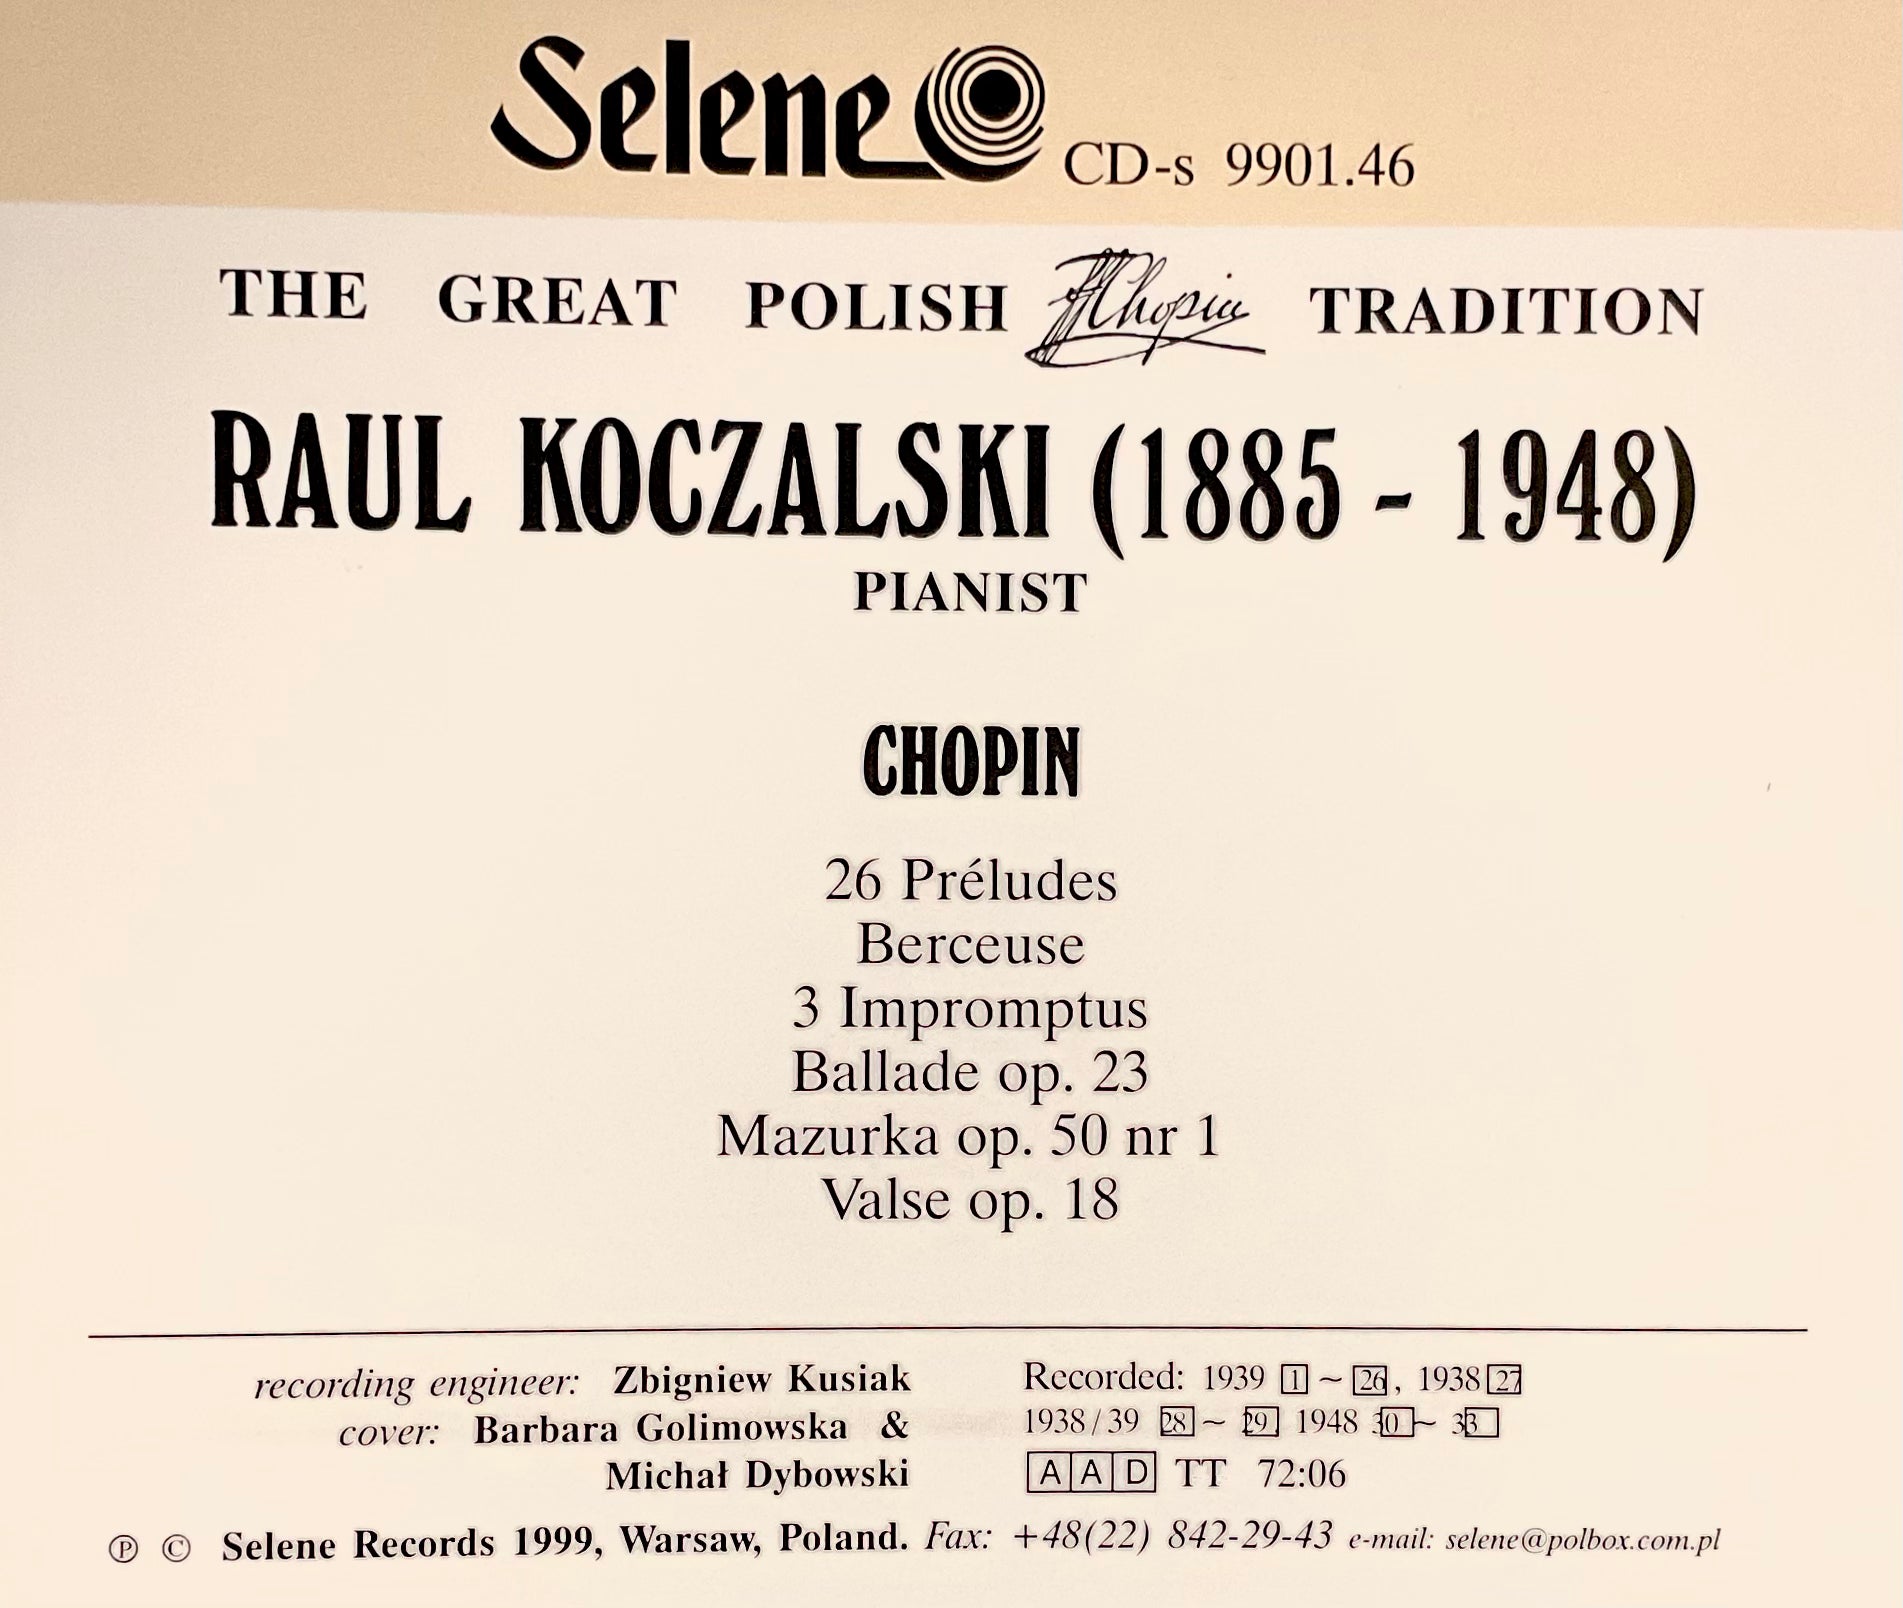 The Great Polish Chopin Tradition - Raul Koczalski vol V